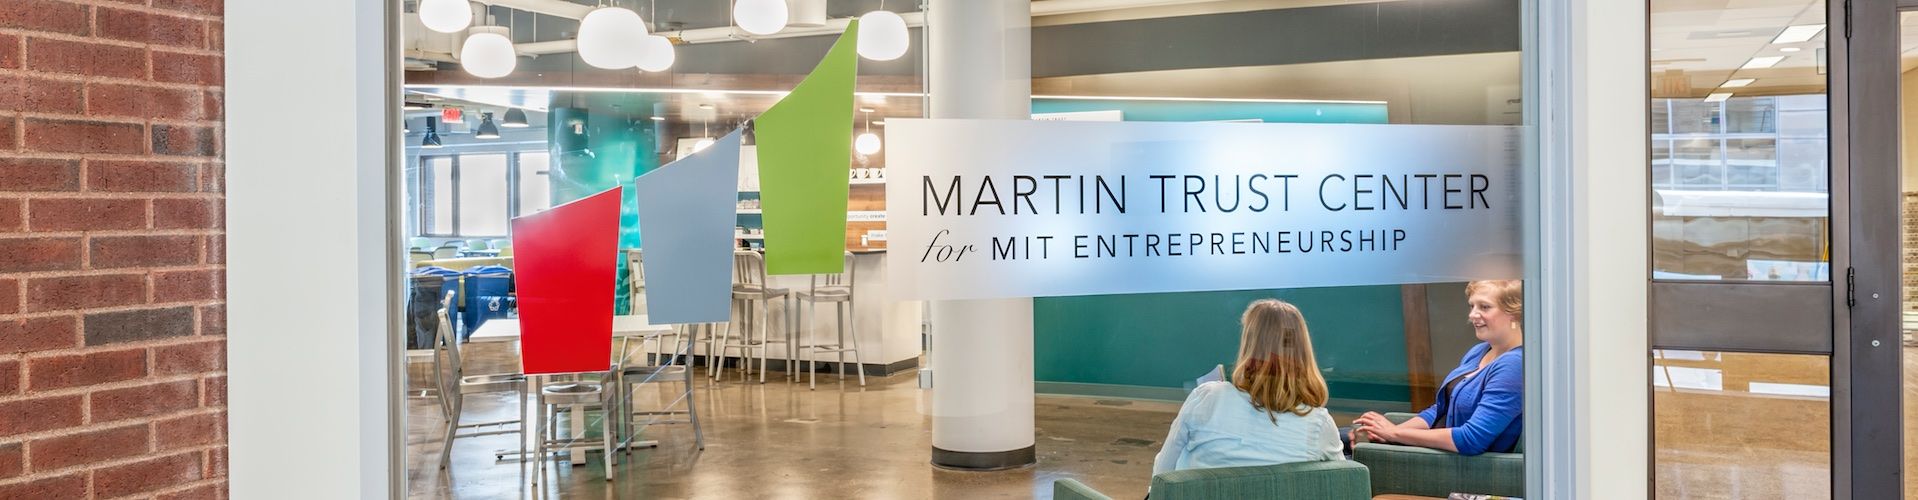 Martin Trust Center